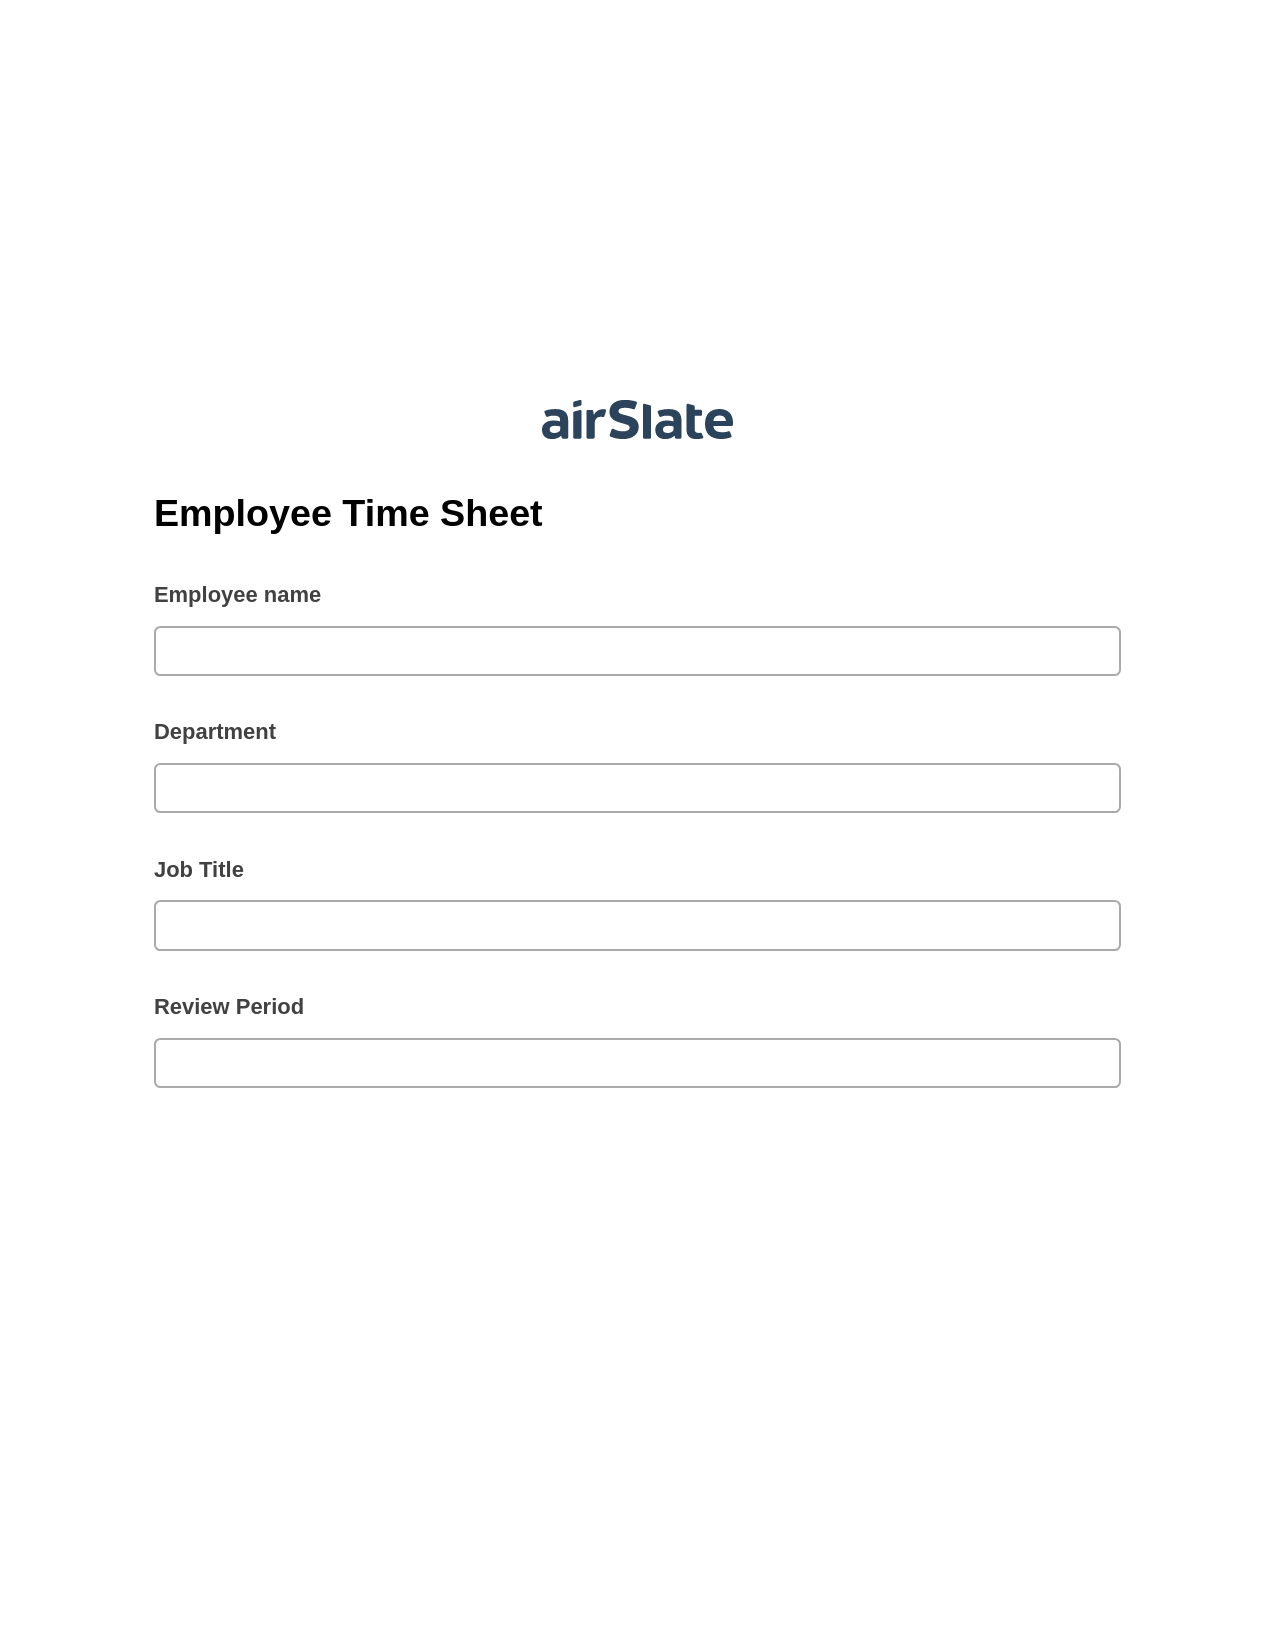 Employee Time Sheet Pre-fill from Salesforce Records Bot, Update Audit Trail Bot, Webhook Postfinish Bot